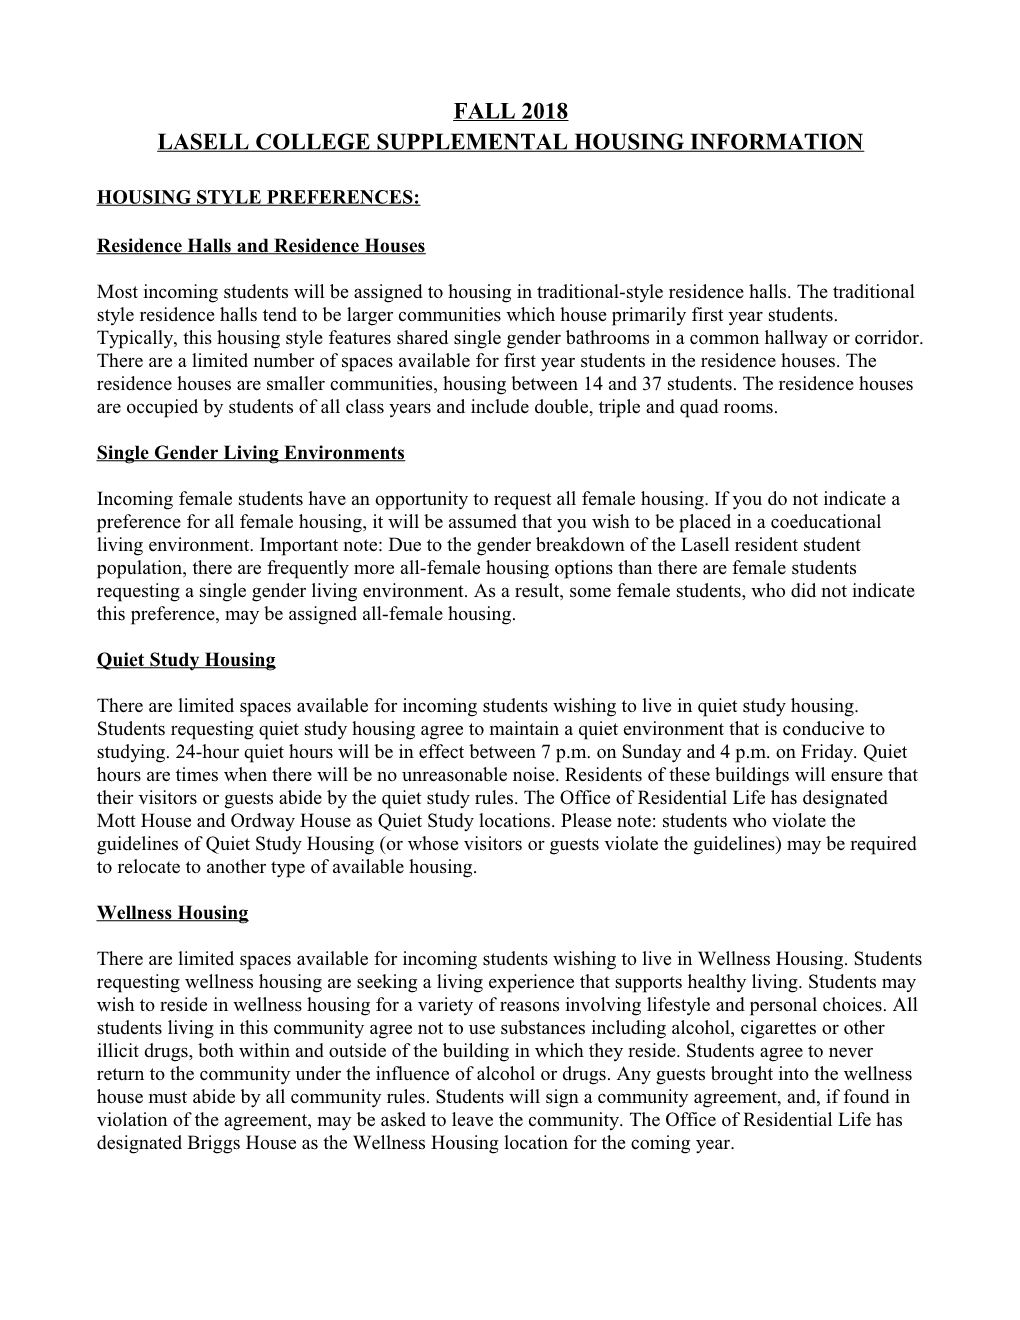 Lasell College Supplemental Housing Information